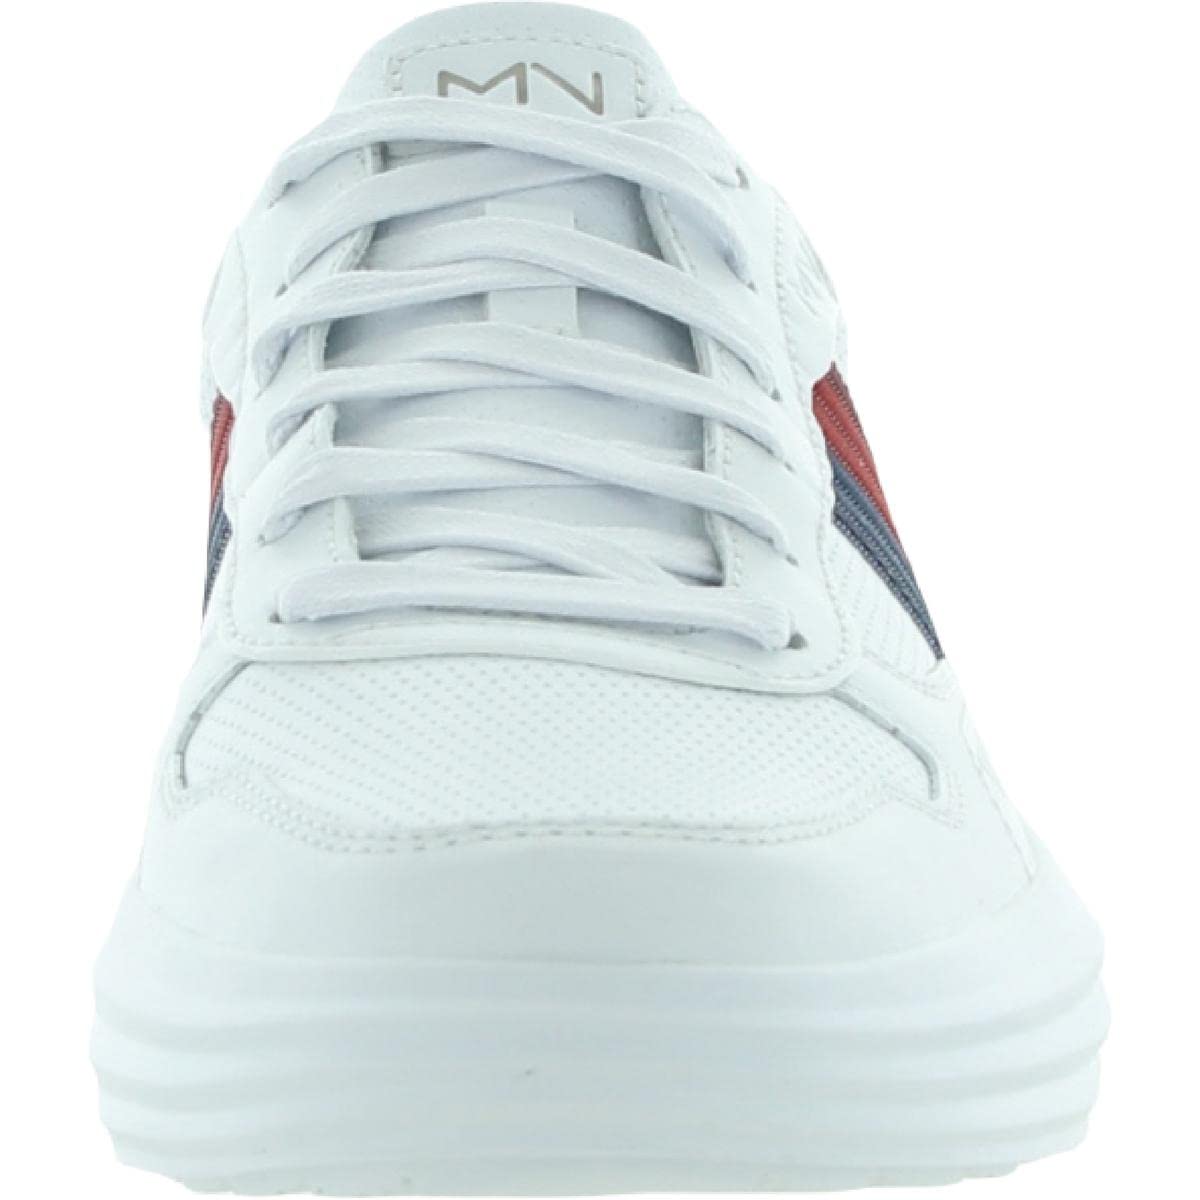 Mua Mark Nason Men's Comfort Sneaker trên Amazon Mỹ chính hãng 2023 |  Giaonhan247